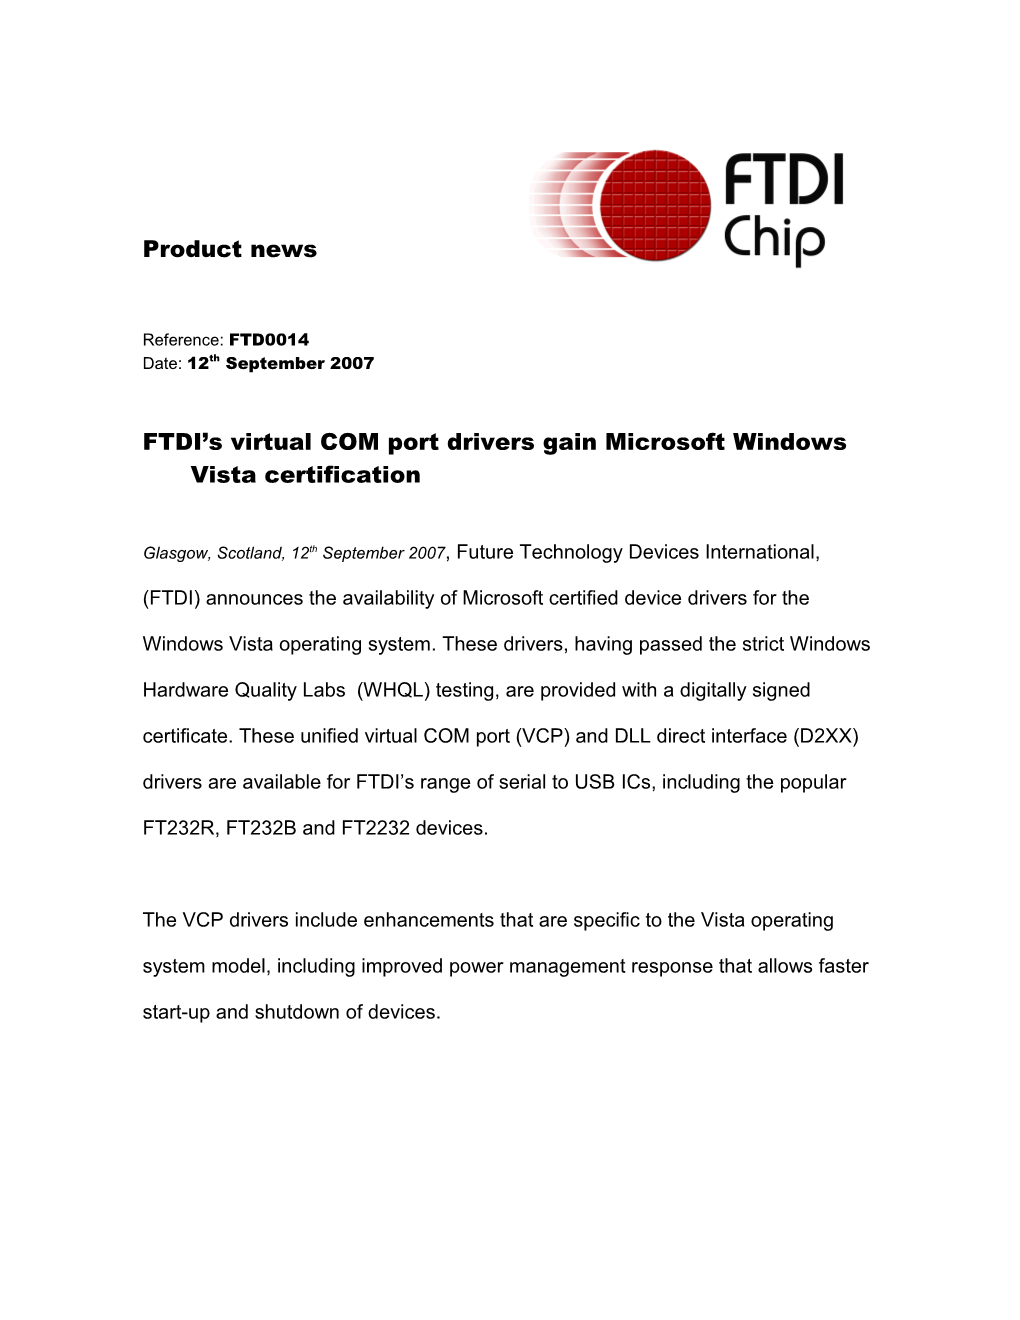 FTDI S Virtual COM Port Drivers Gain Microsoft Windows Vista Certification